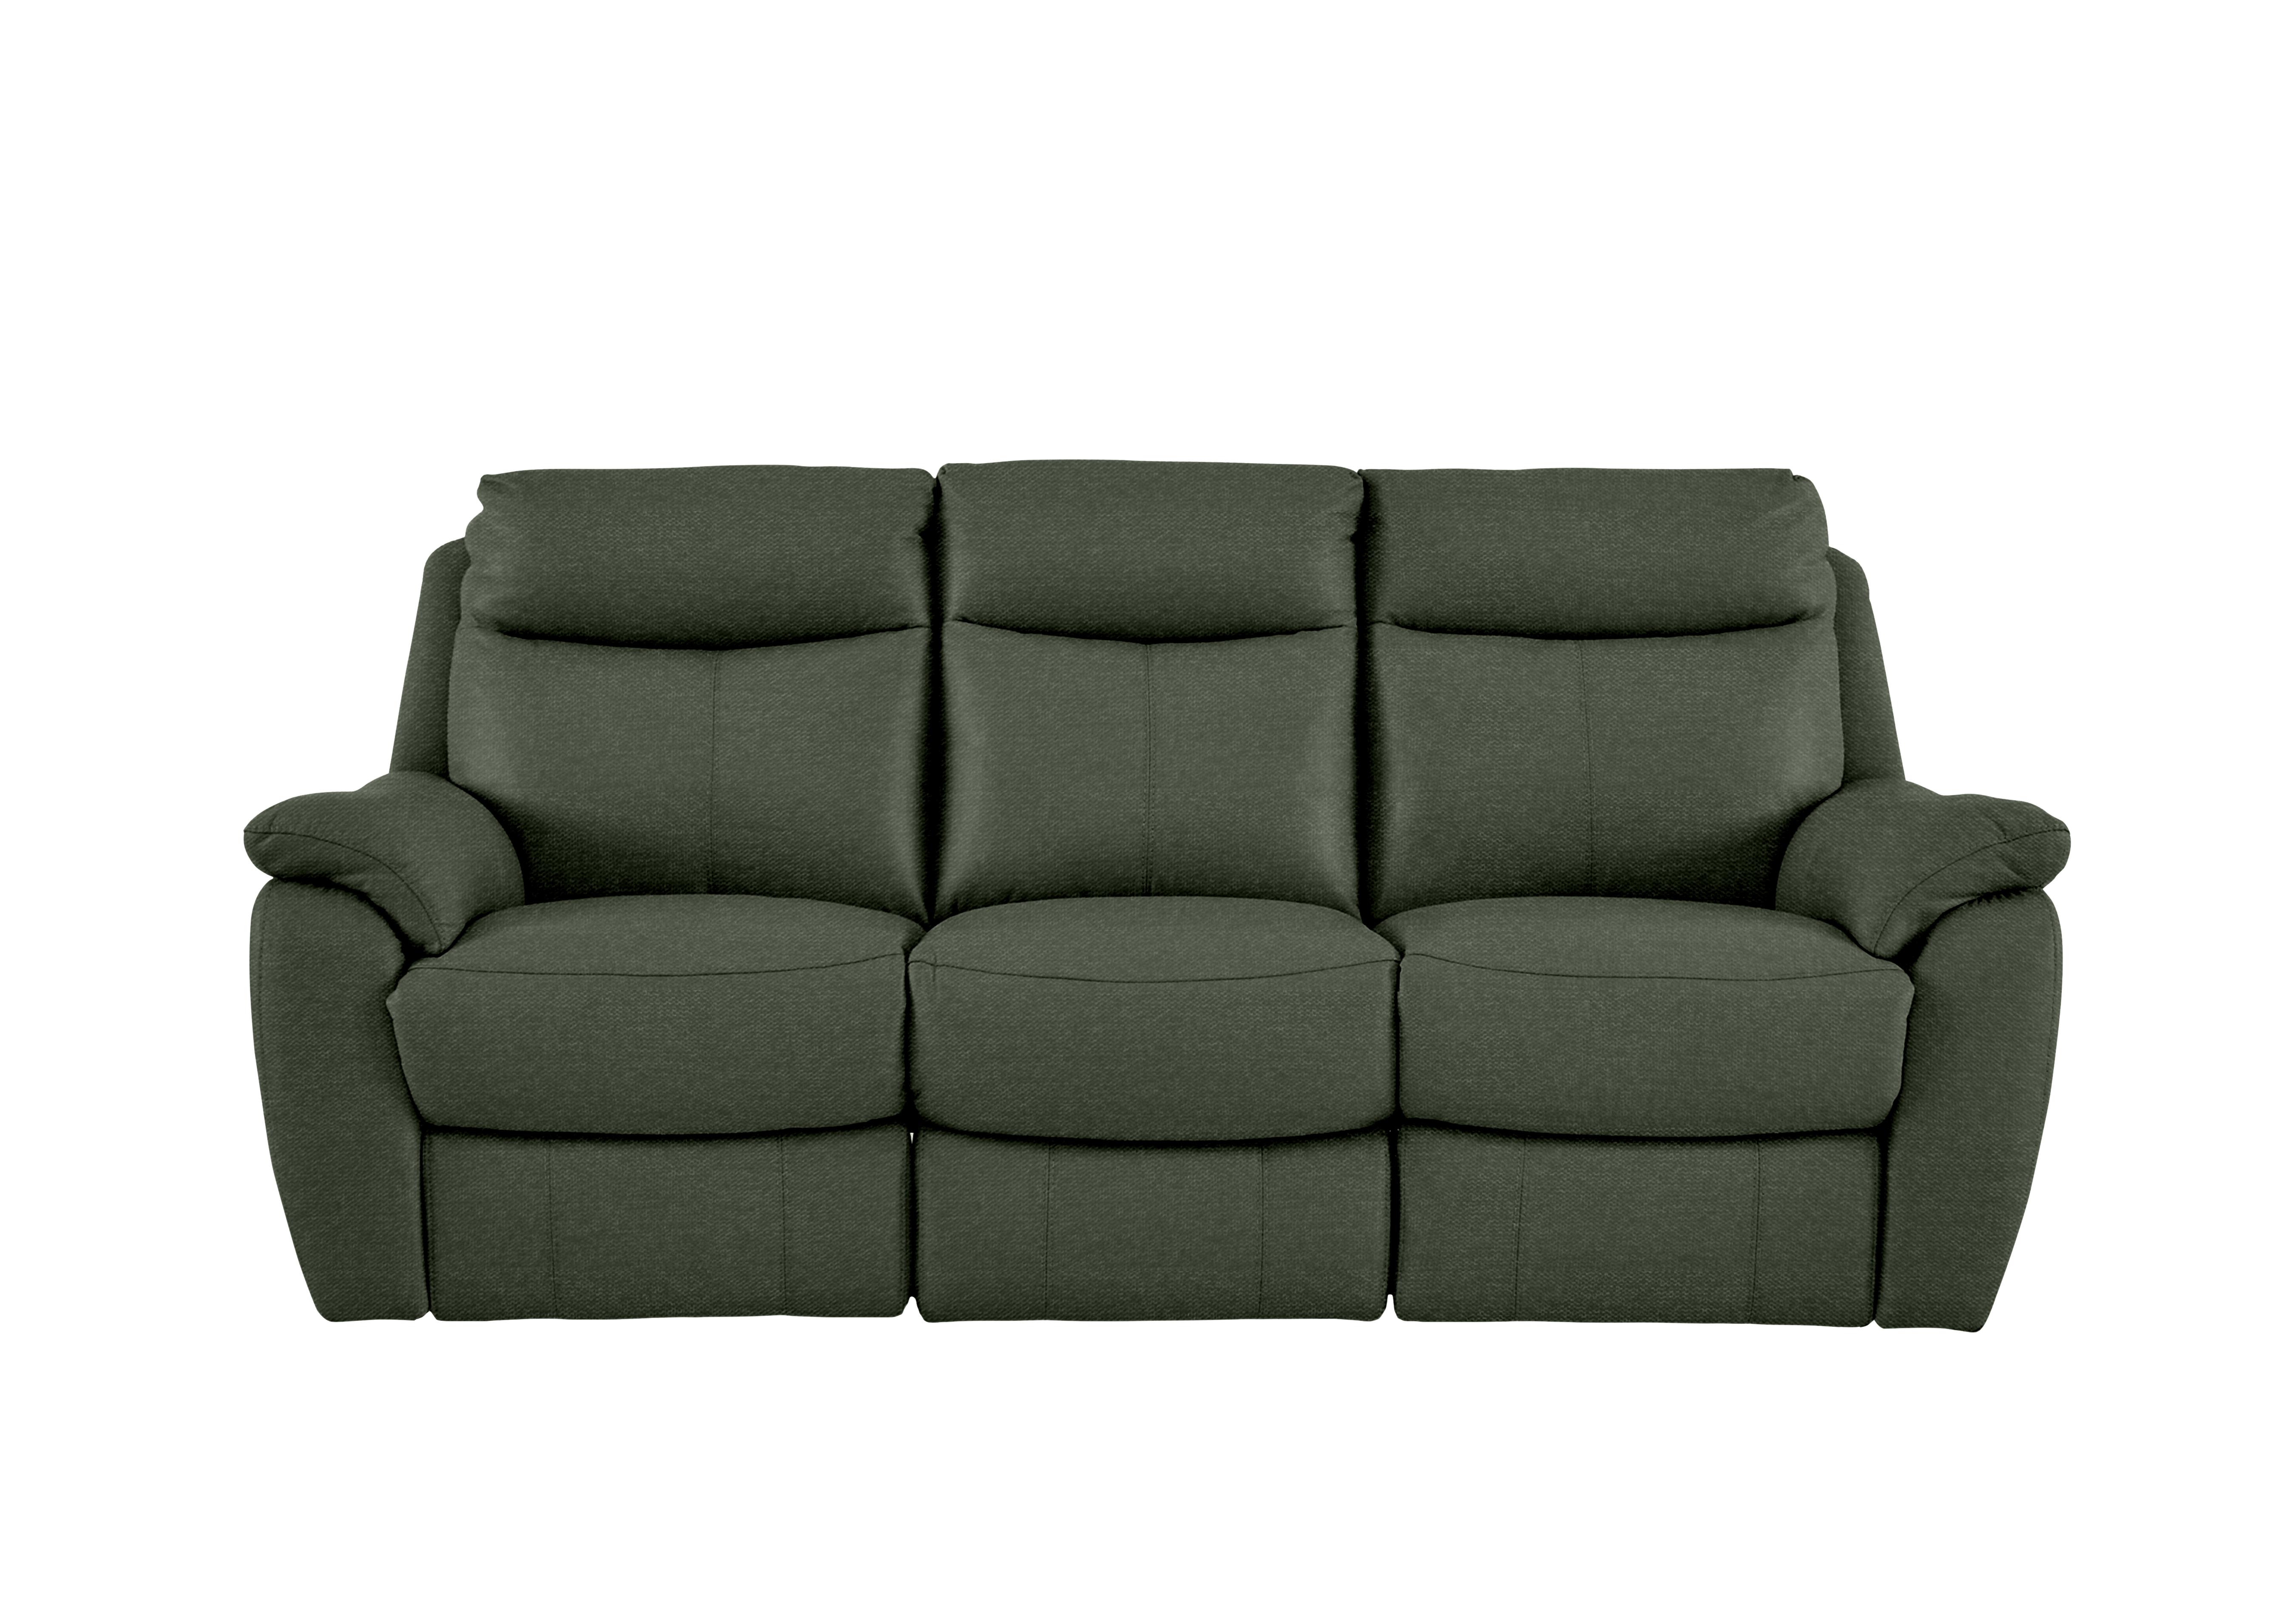 Snug 3 Seater Fabric Sofa in Fab-Ska-R48 Moss Green on Furniture Village